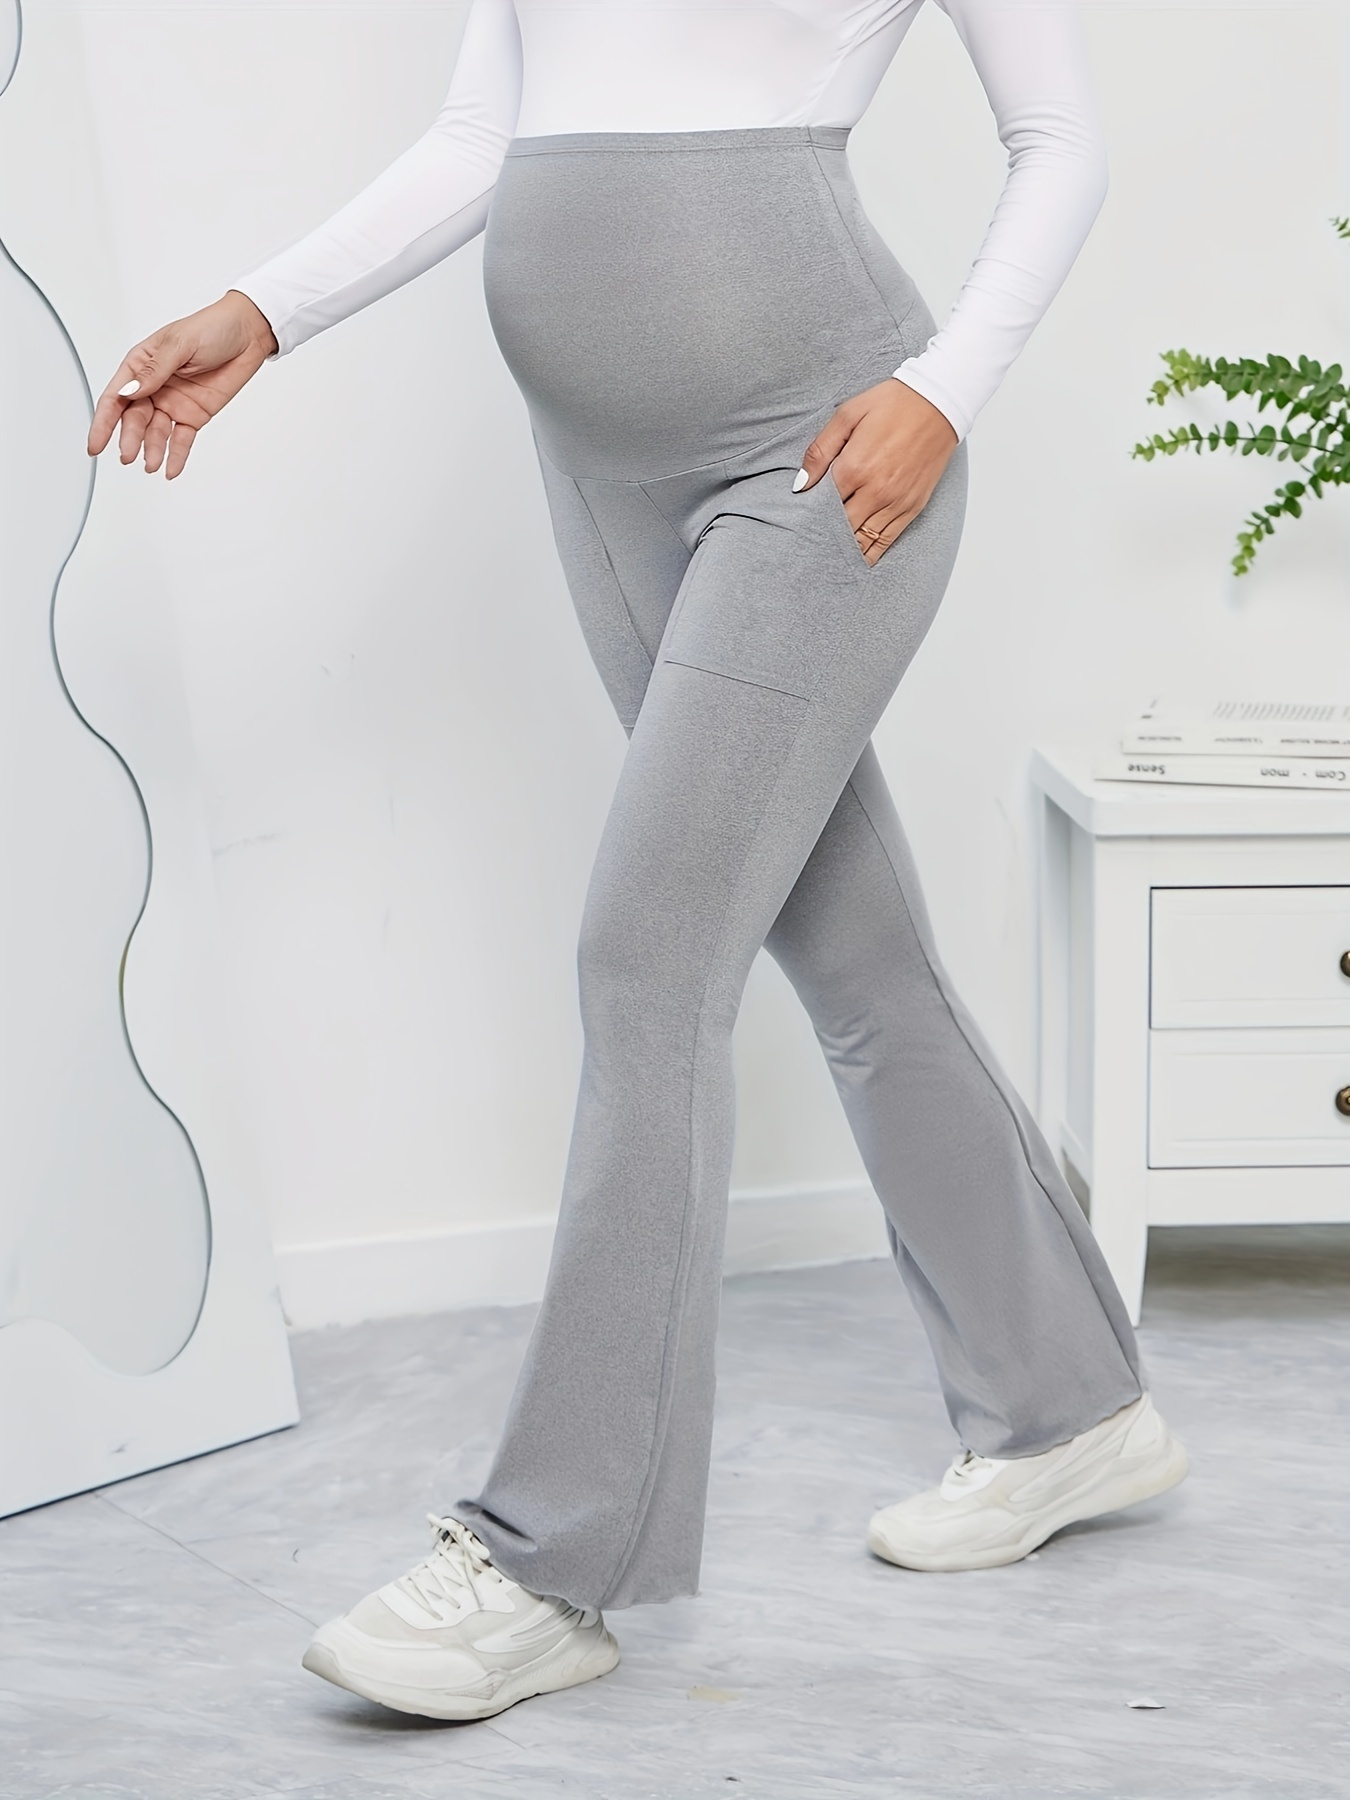 skpabo Women's Maternity Lounge Pants Stretchy Pregnancy Trousers